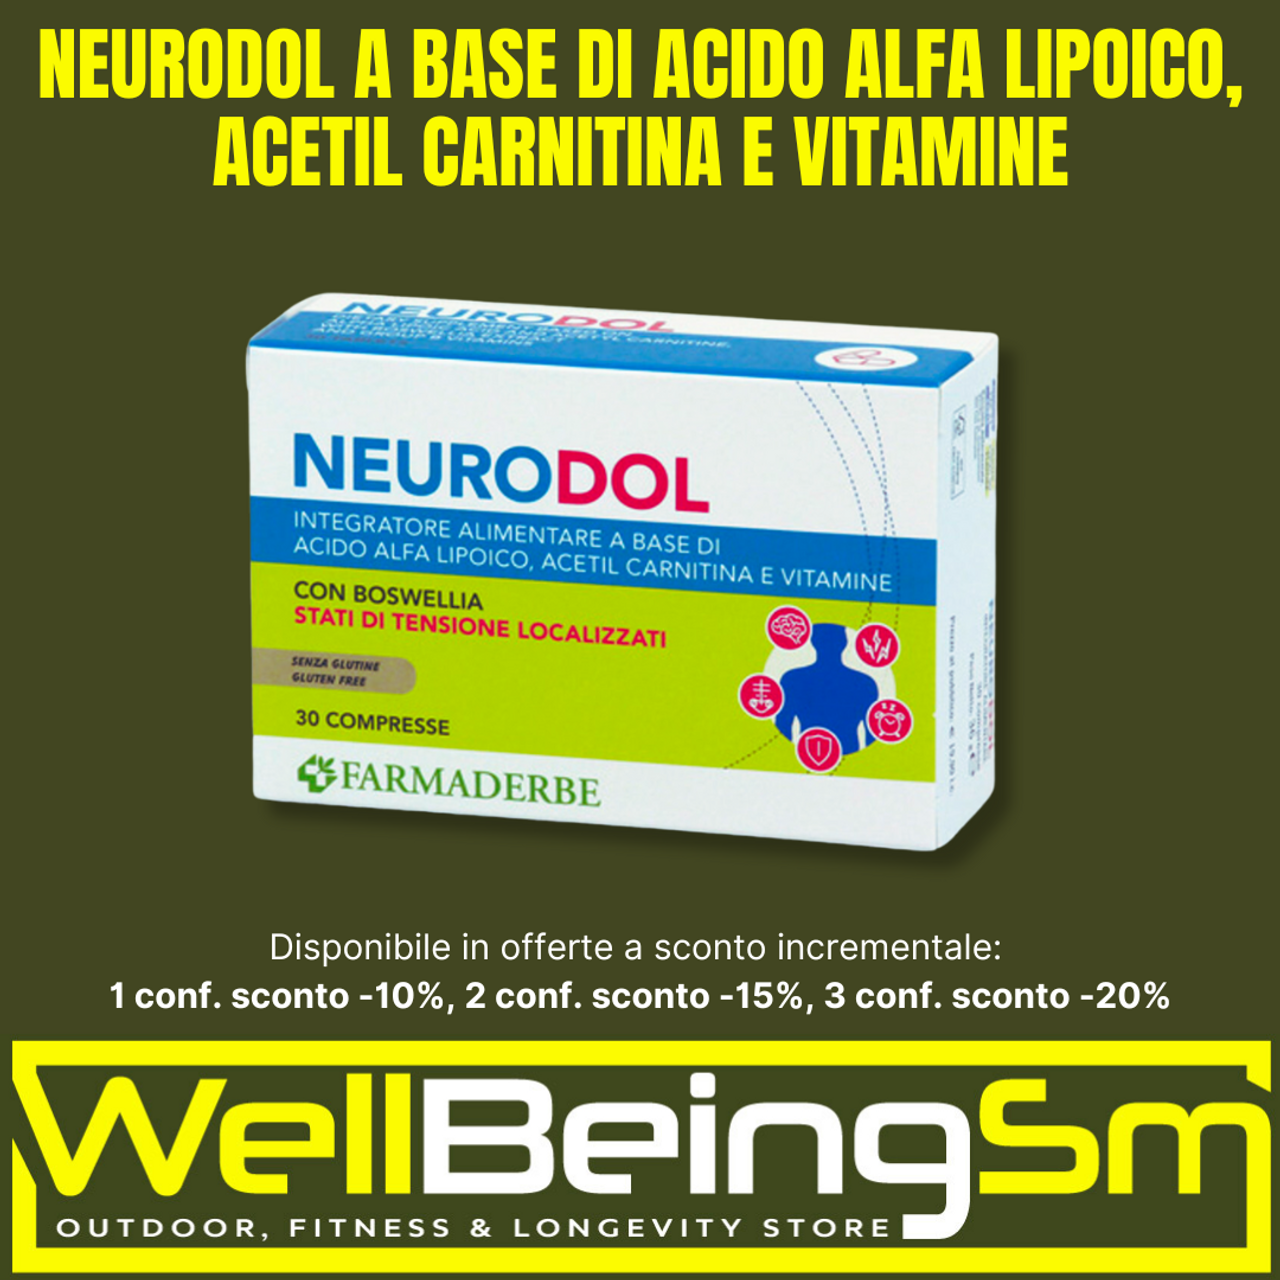 NEURODOL a base di acido alfa lipoico, acetil carnitina e vitamine (30 compresse)